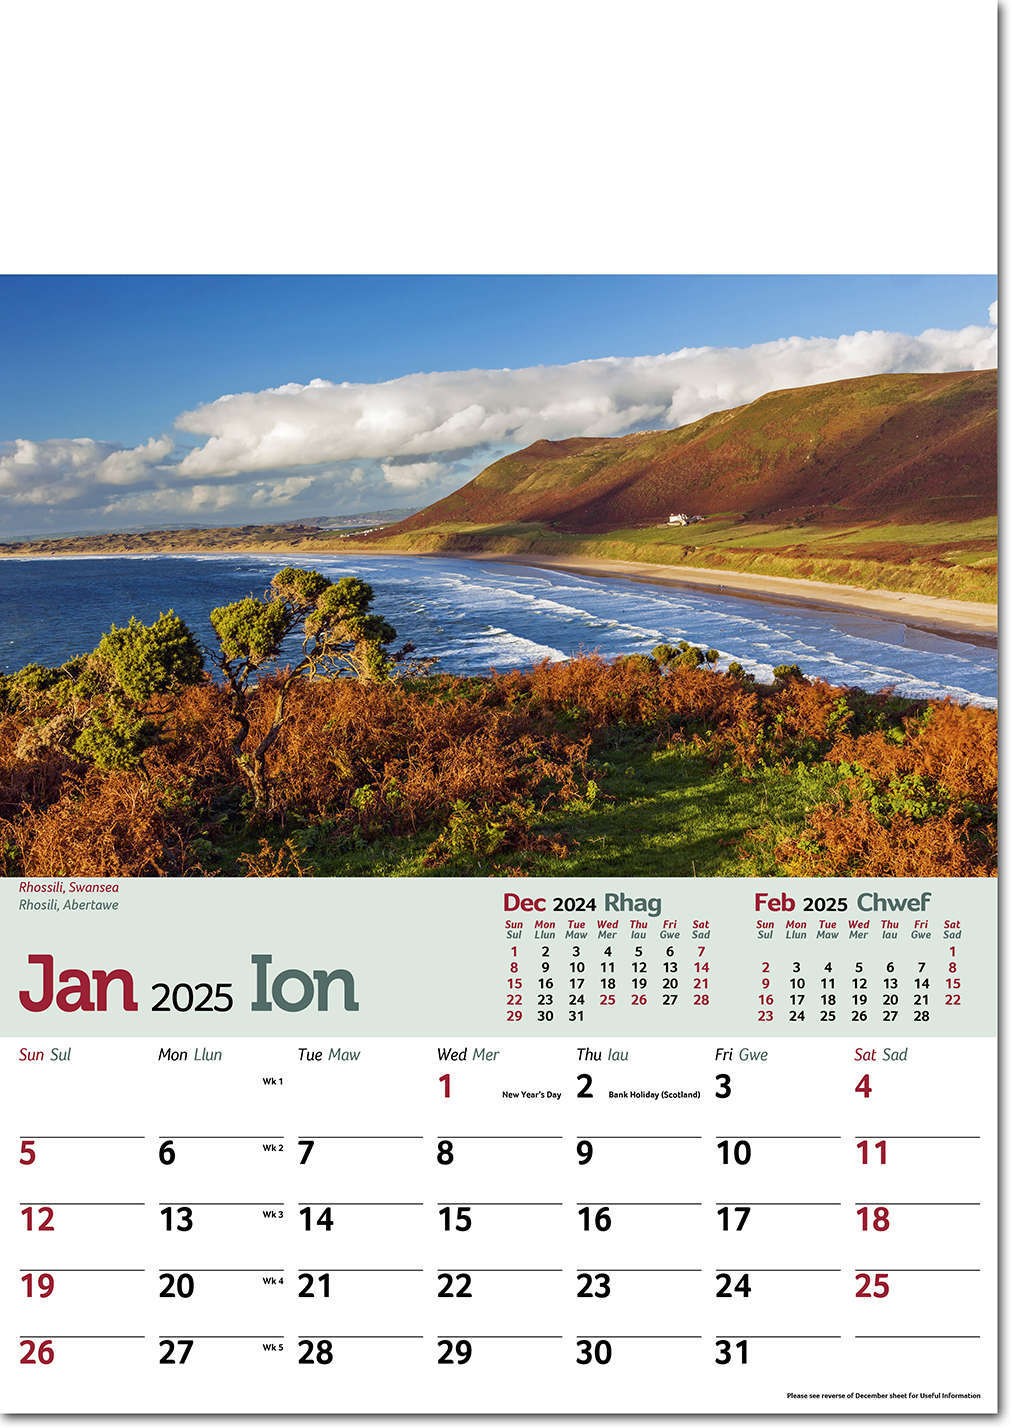 Tour of Wales Calendar